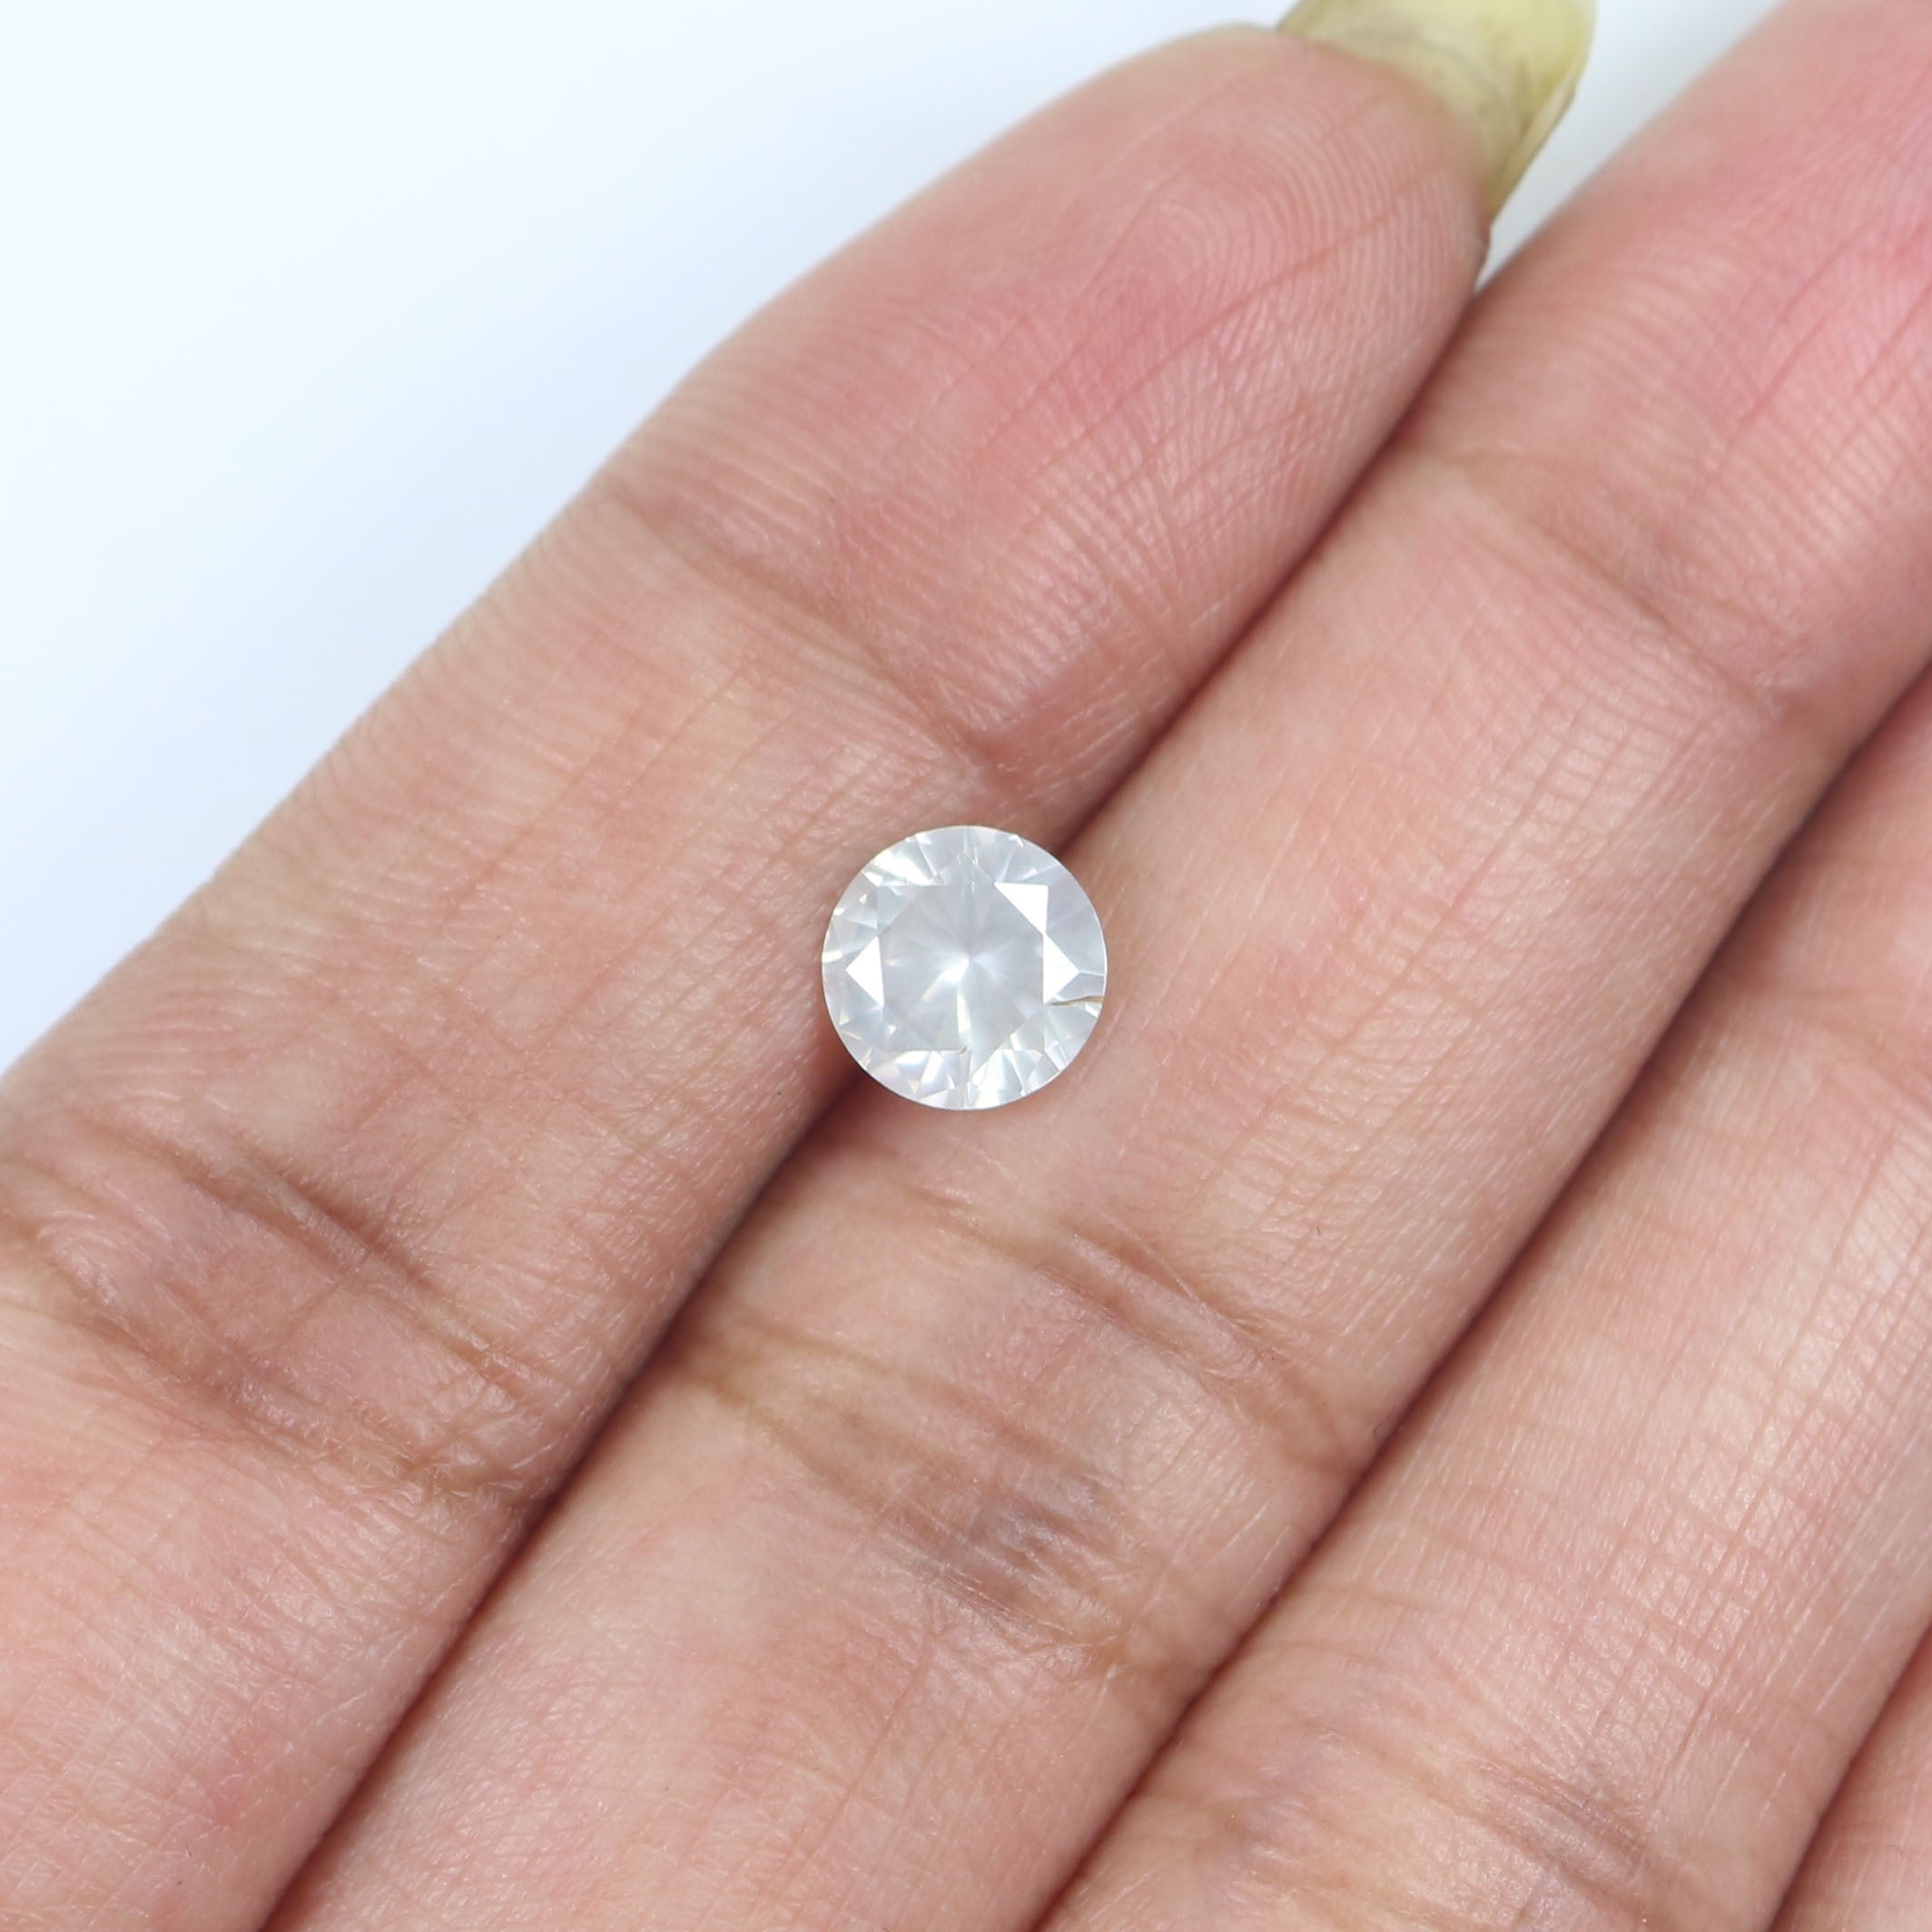 1.02 CT Natural Loose Round Shape Diamond Grey Color Round Cut Diamond 6.60 MM Natural Loose Diamond Round Brilliant Cut Diamond QL2516